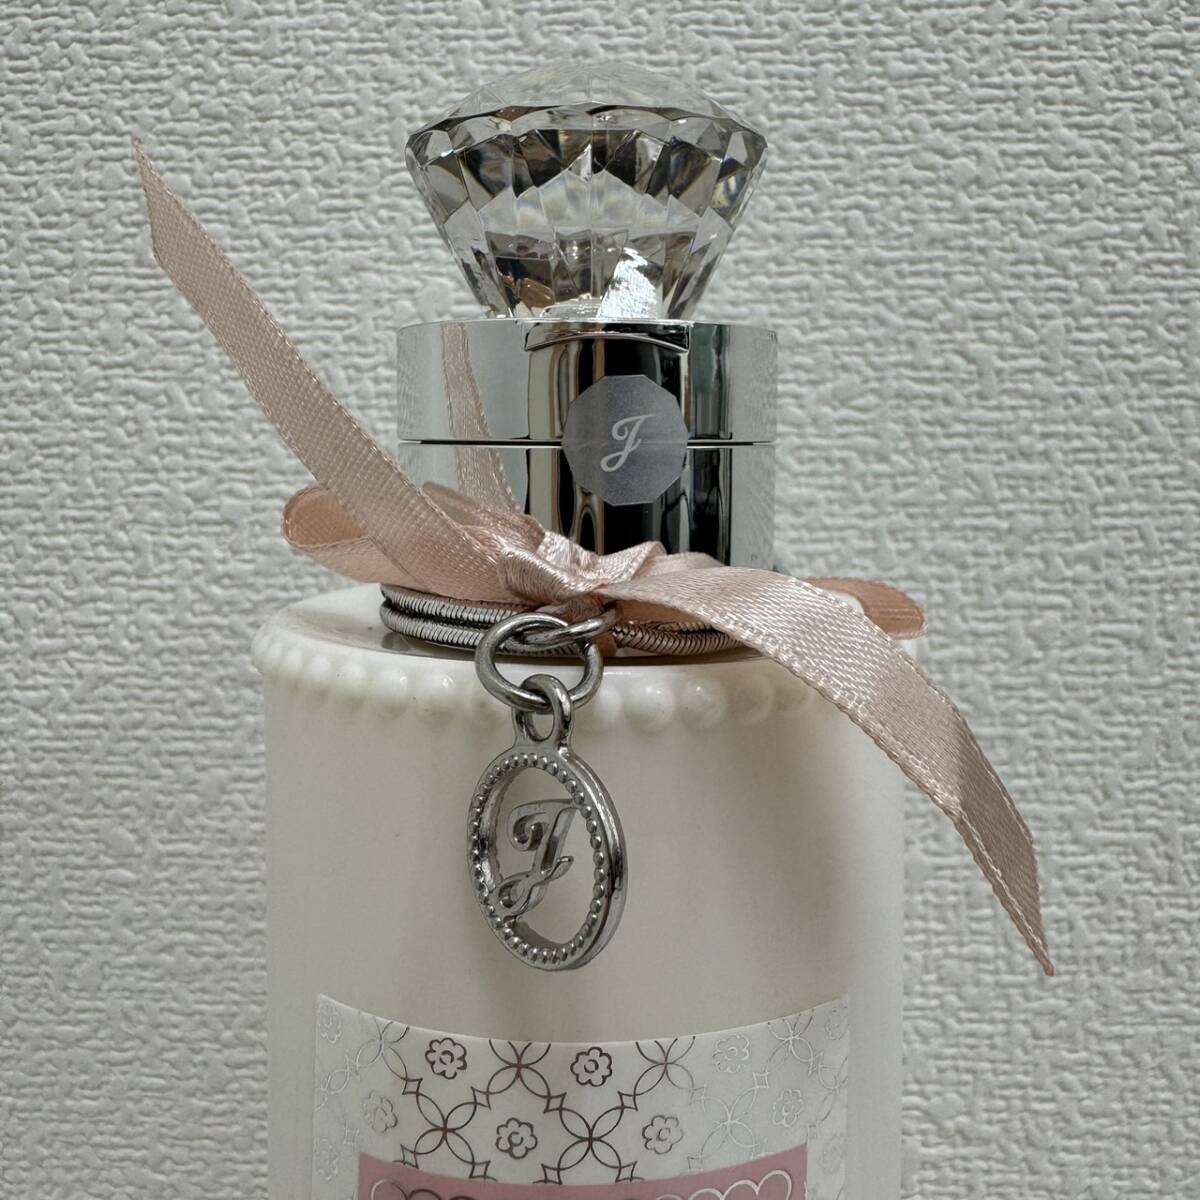 #10318 JILLSTUART Jill Stuart body milk relax white floral. fragrance 250ml unused storage goods present condition goods 